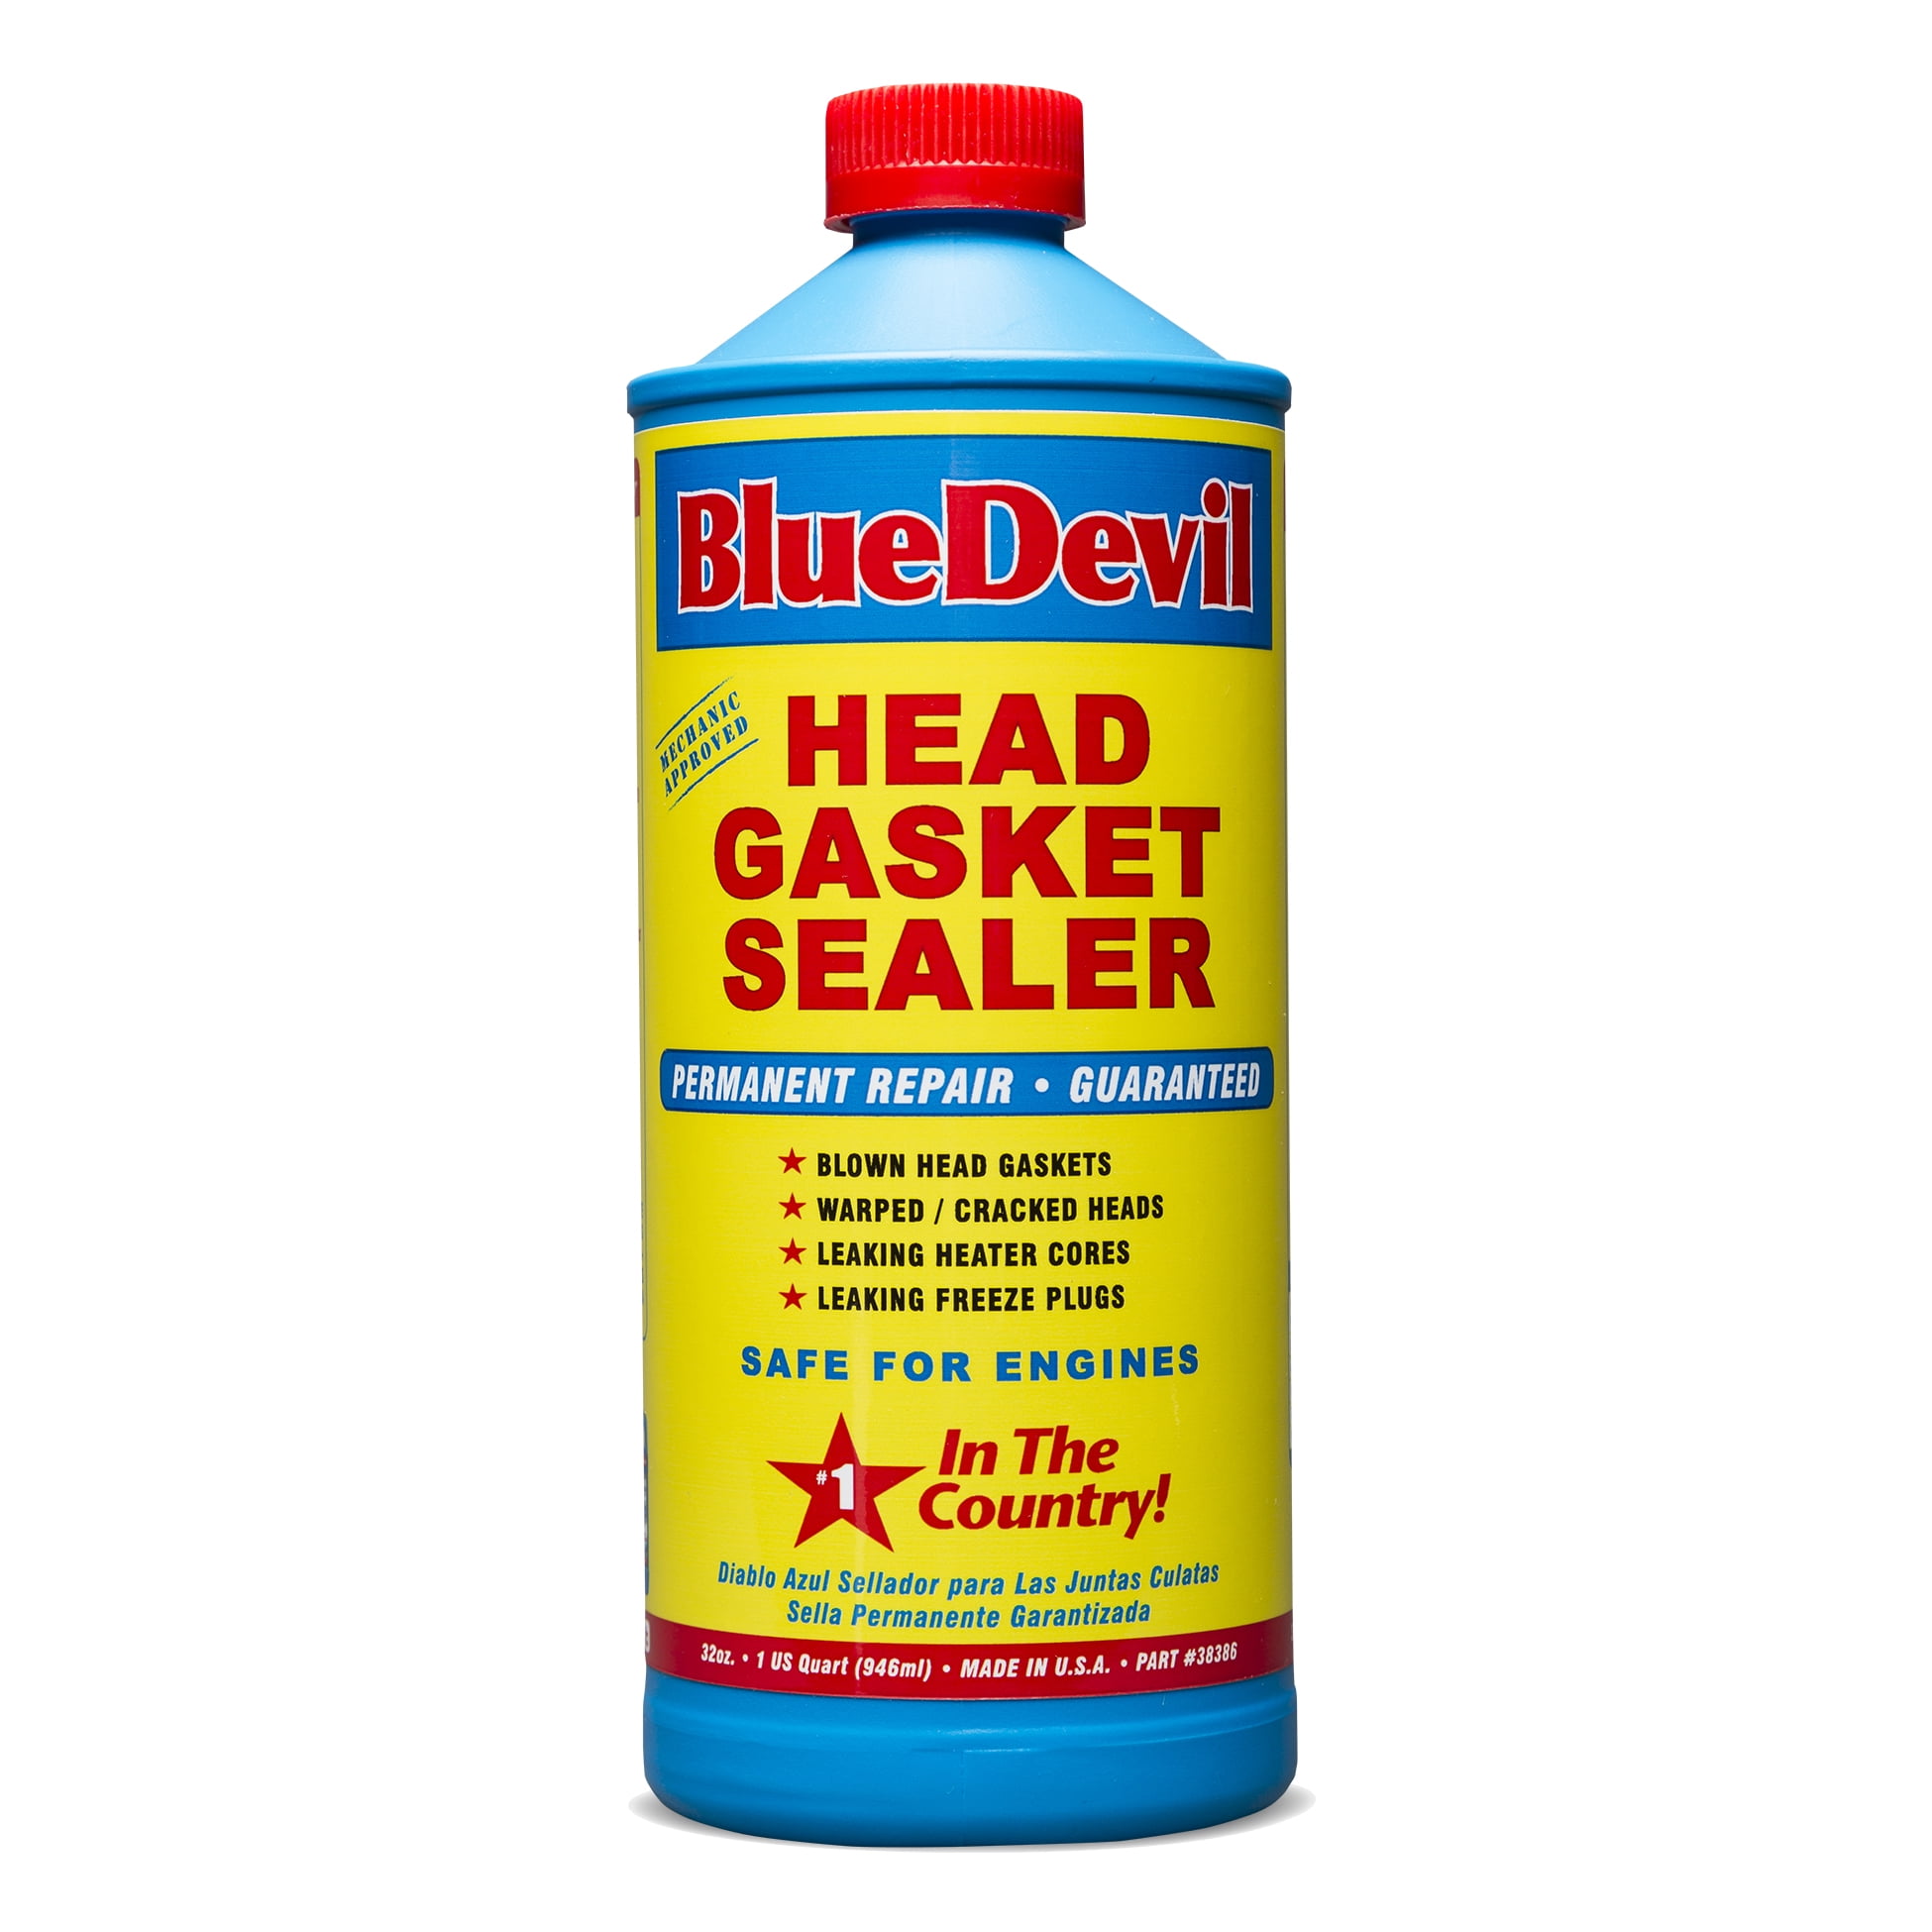 whats the best head gasket sealer